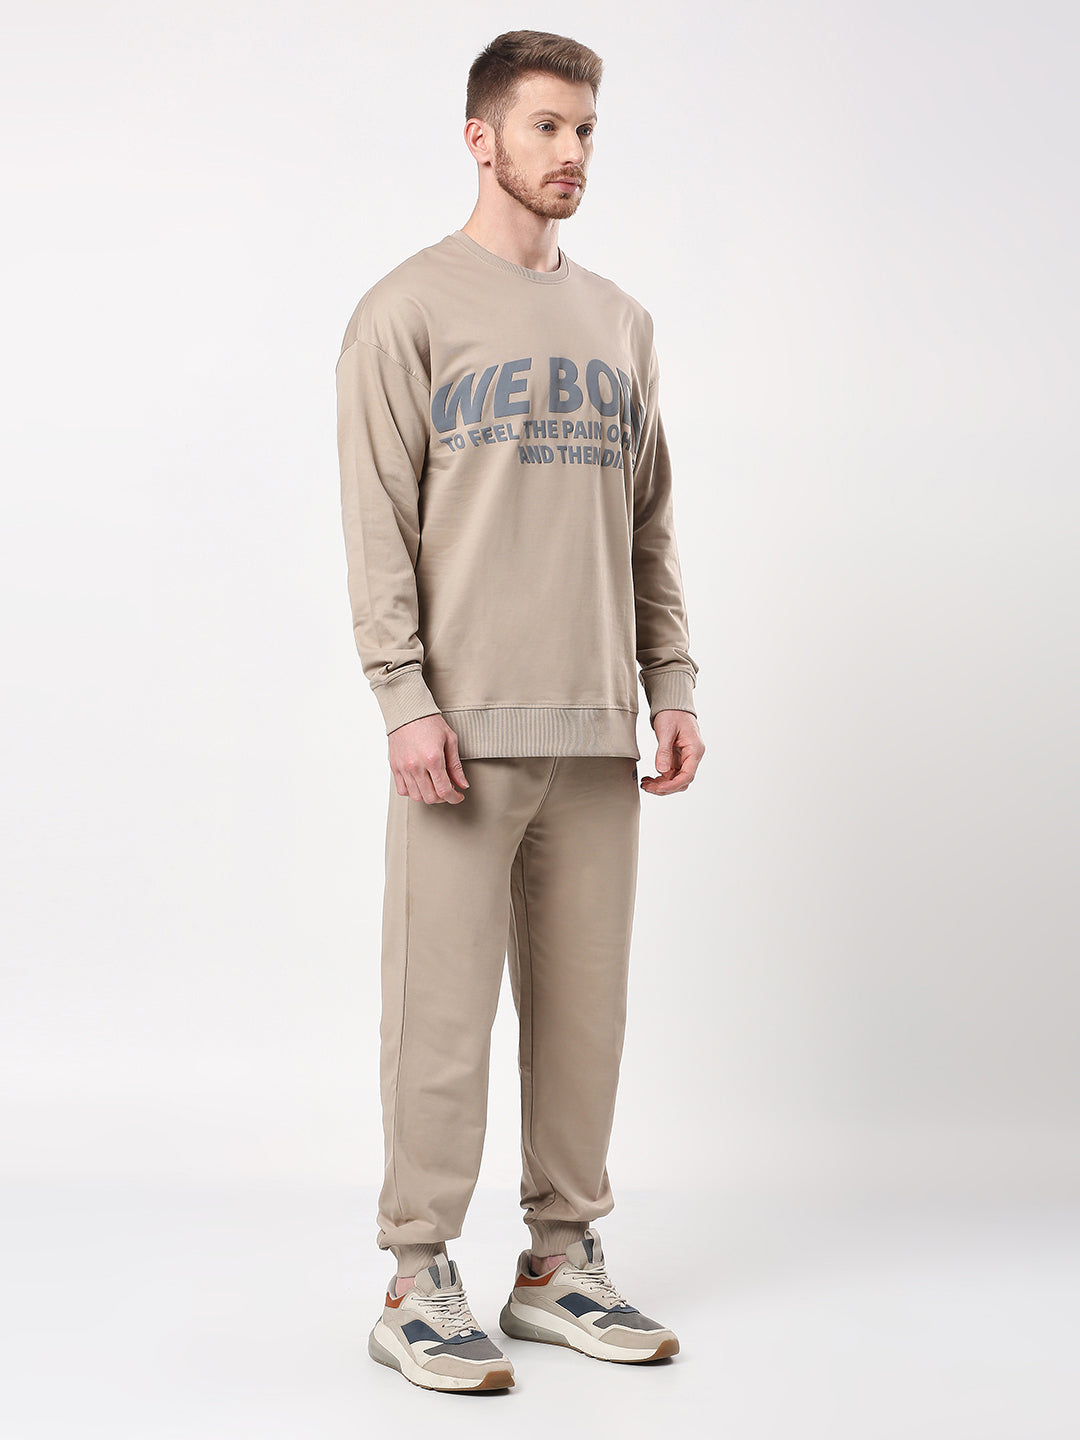 We born- Men's Printed Sweatshirt with Pants Co-ord-300 GSM Looper